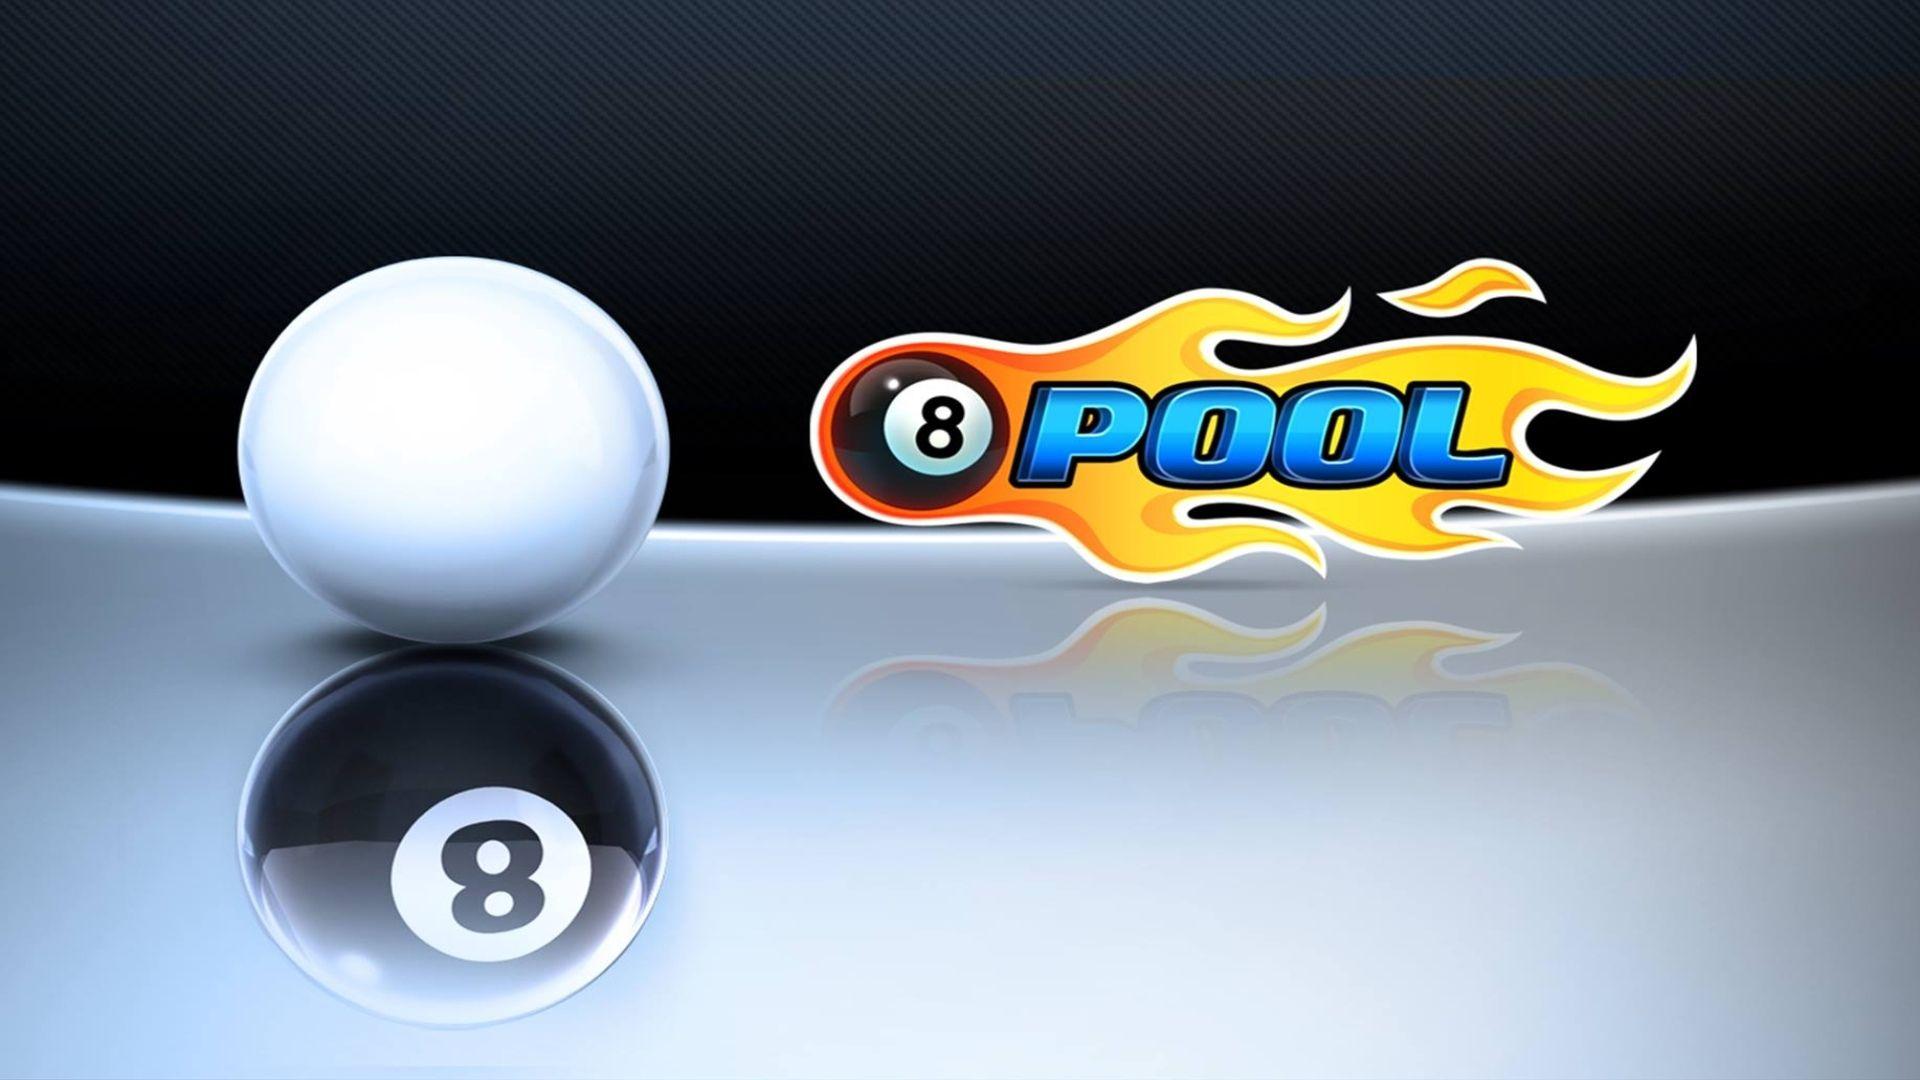 8 Ball Pool Mod apk 5.13.0 (Anti Ban) for android + Mega mod